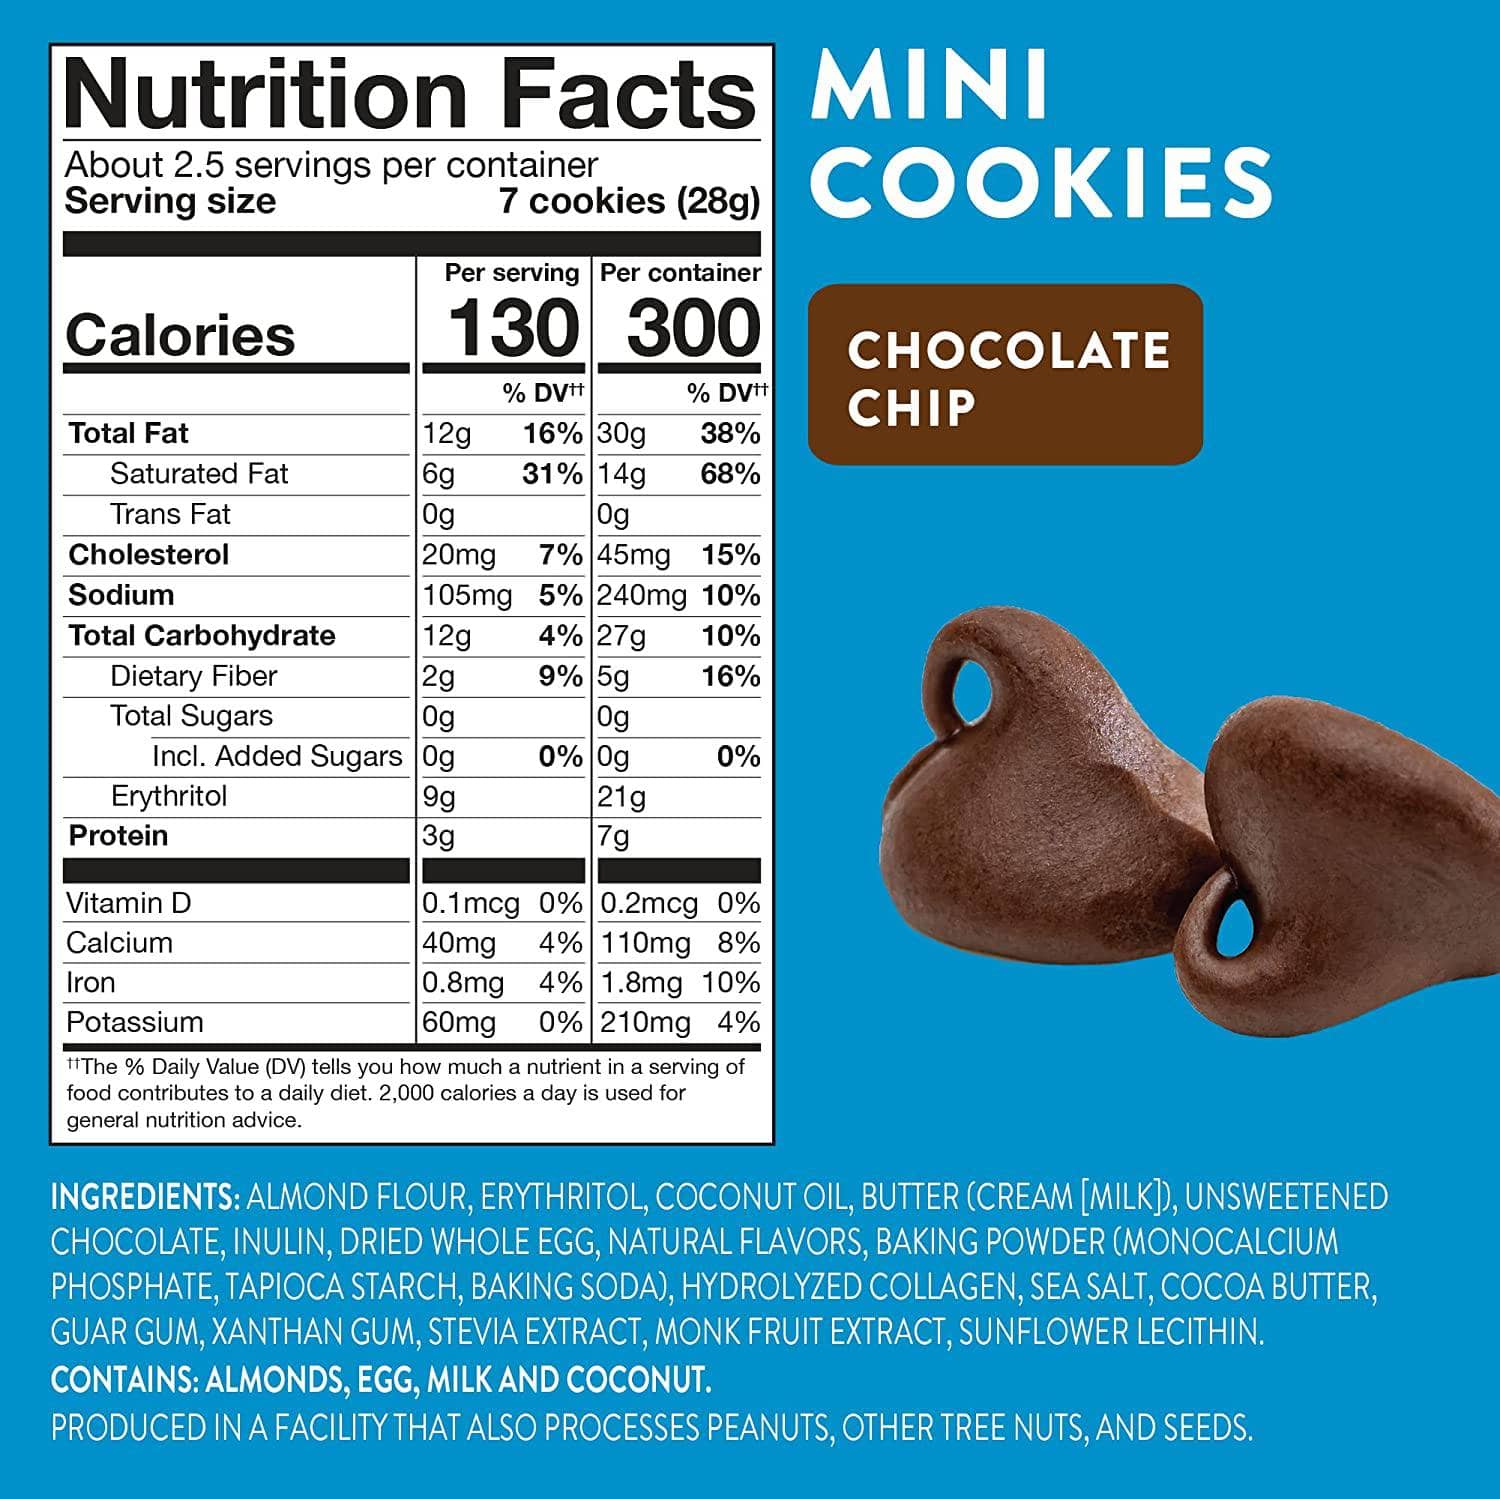 Mini Cookies: Chocolate Chip